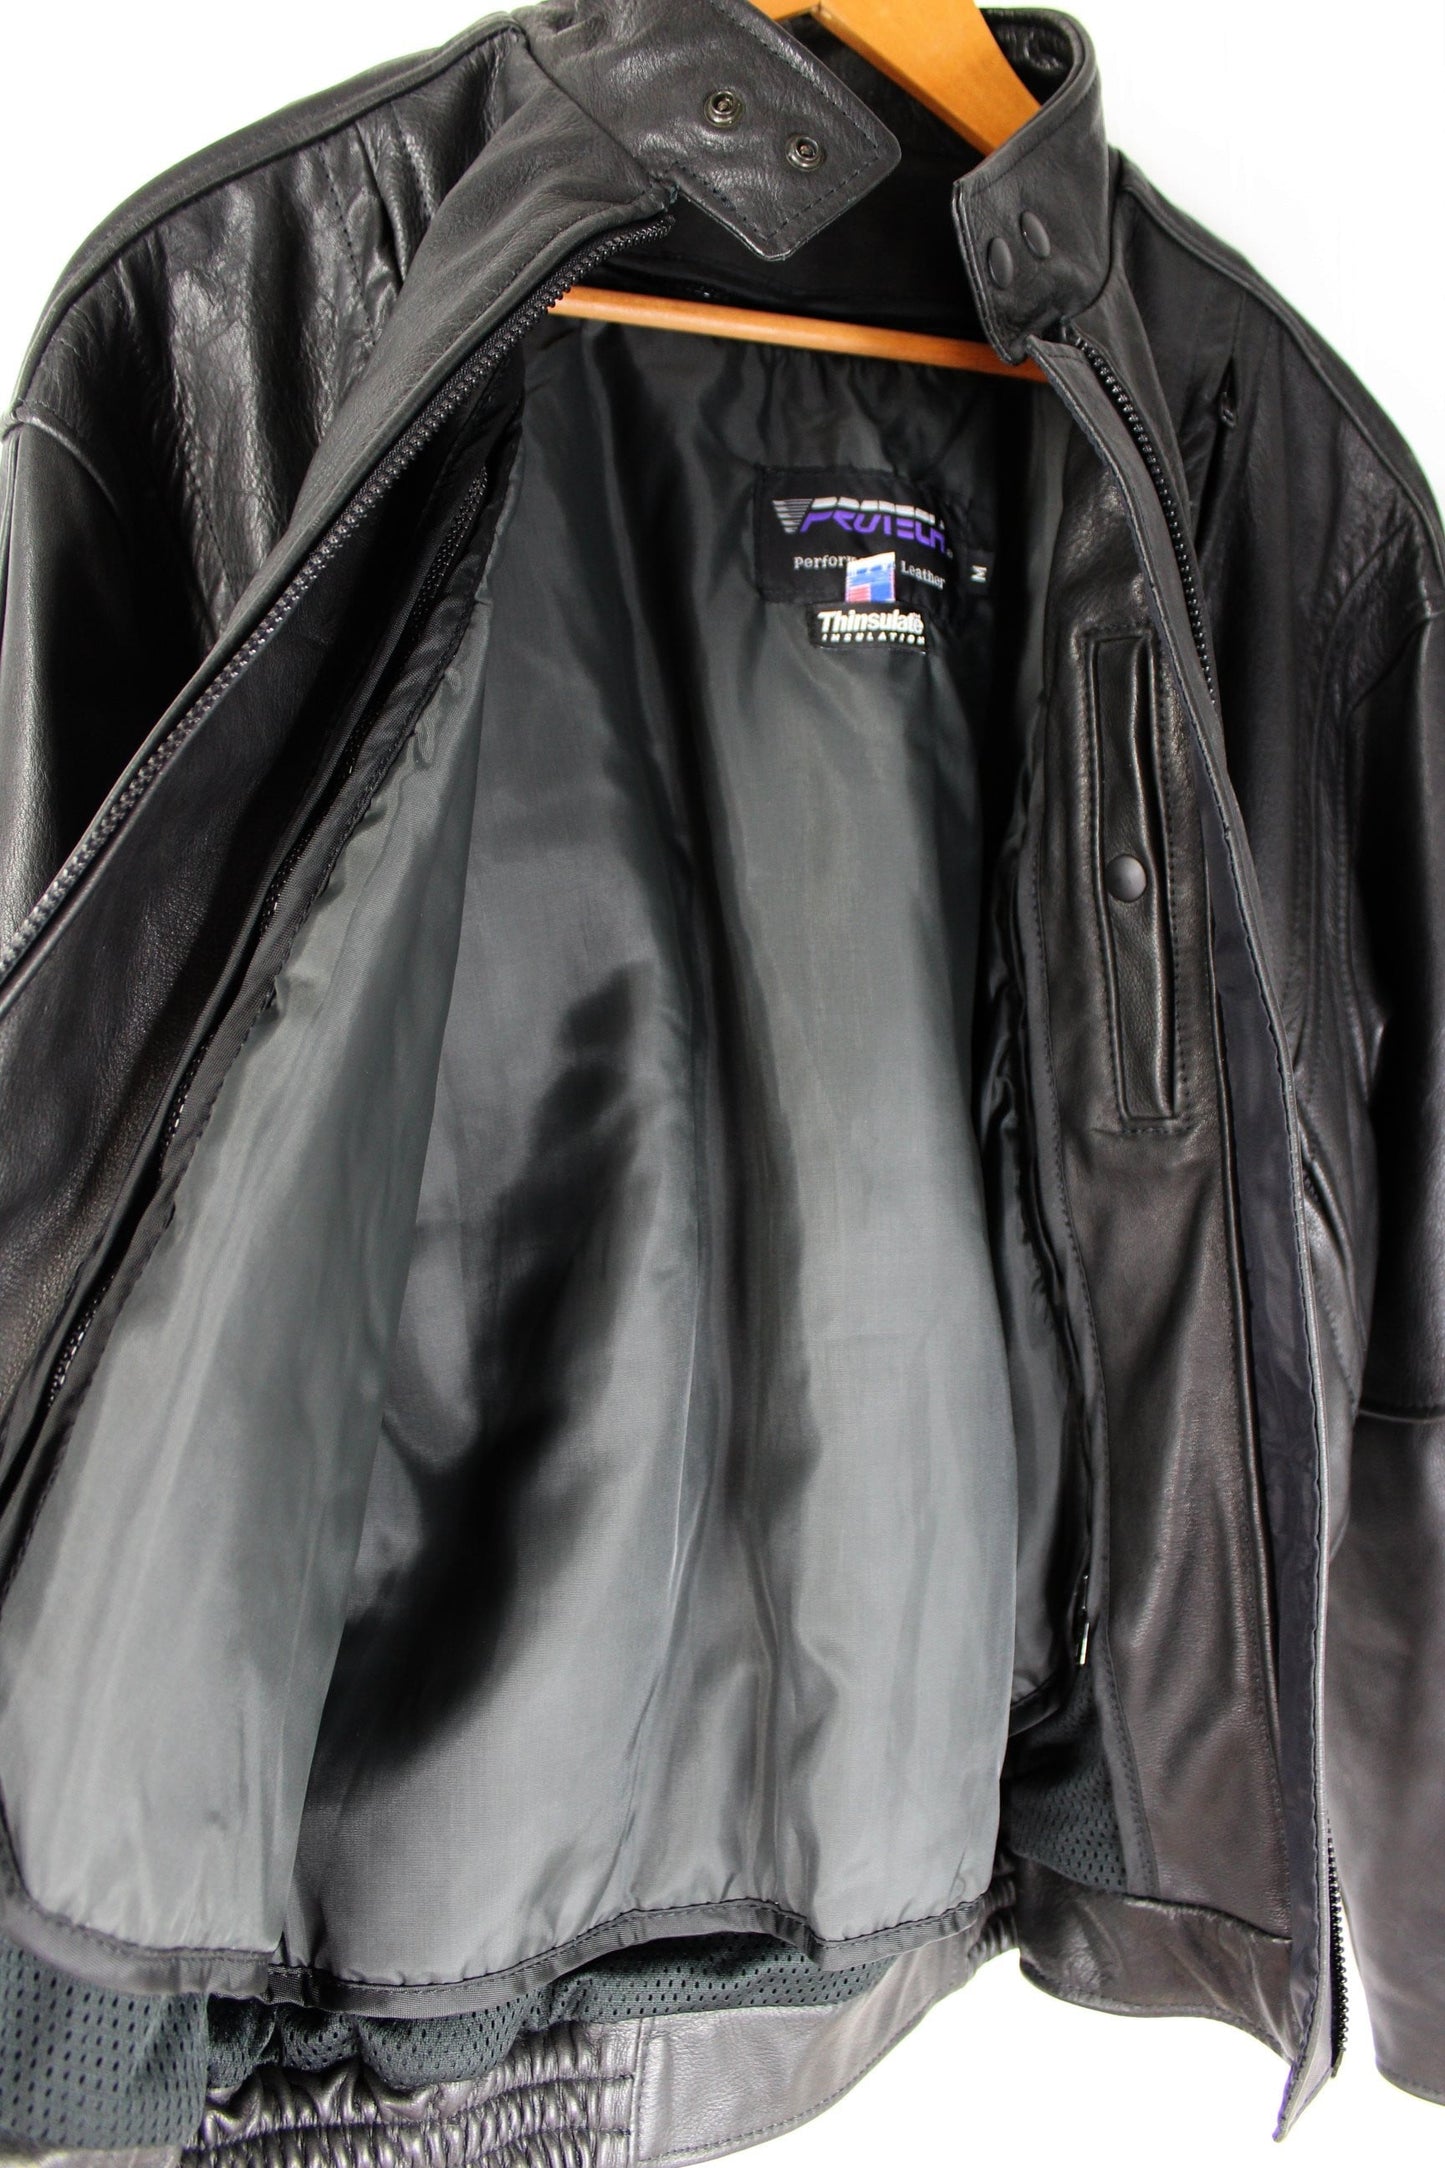 Protech USA Performance Leather Black Motorcycle Jacket M Vintage - Thinsulate Lining  men's biker jacket